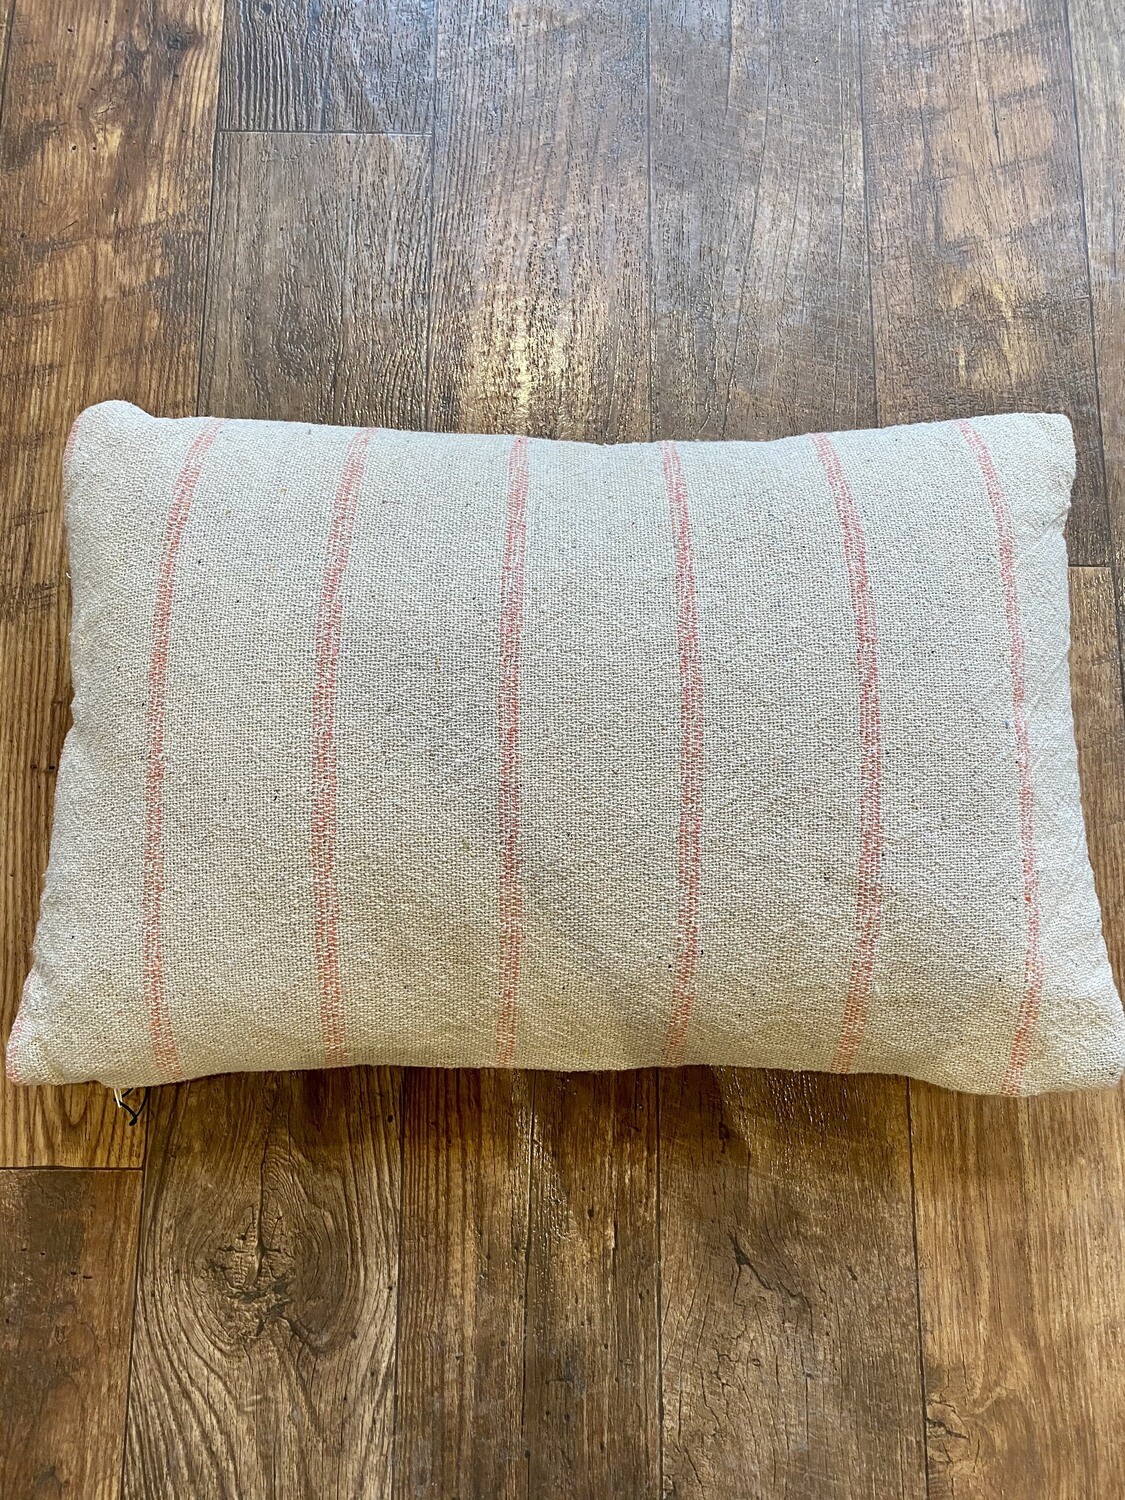 24 x 16 Woven Recycled Cotton Blend Lumbar Pillow Pink Stripes